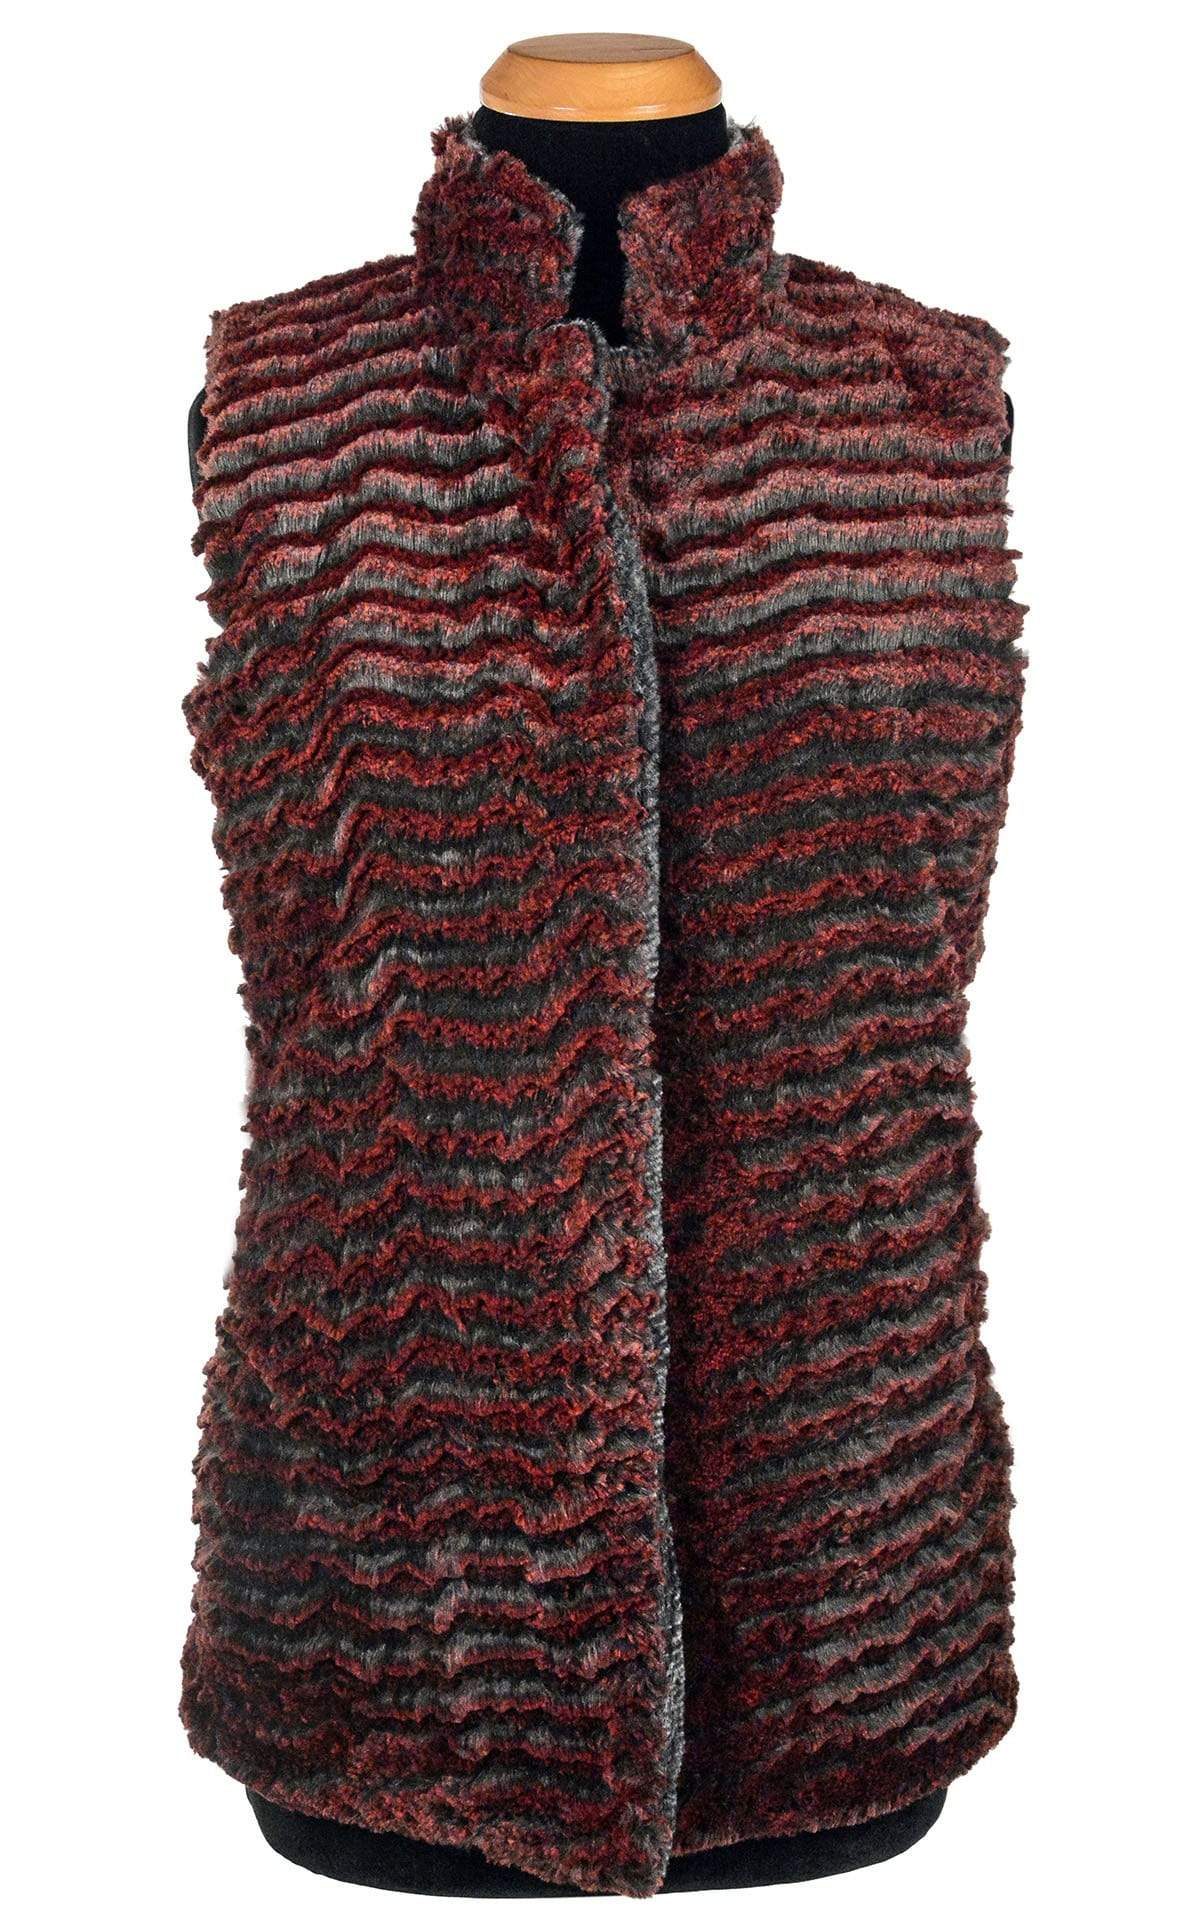 Mandarin Vest Short | Desert Sand in Crimson and Cuddly Black Faux Fur | Reversible | Handmade in Seattle WA | Pandemonium Millinery